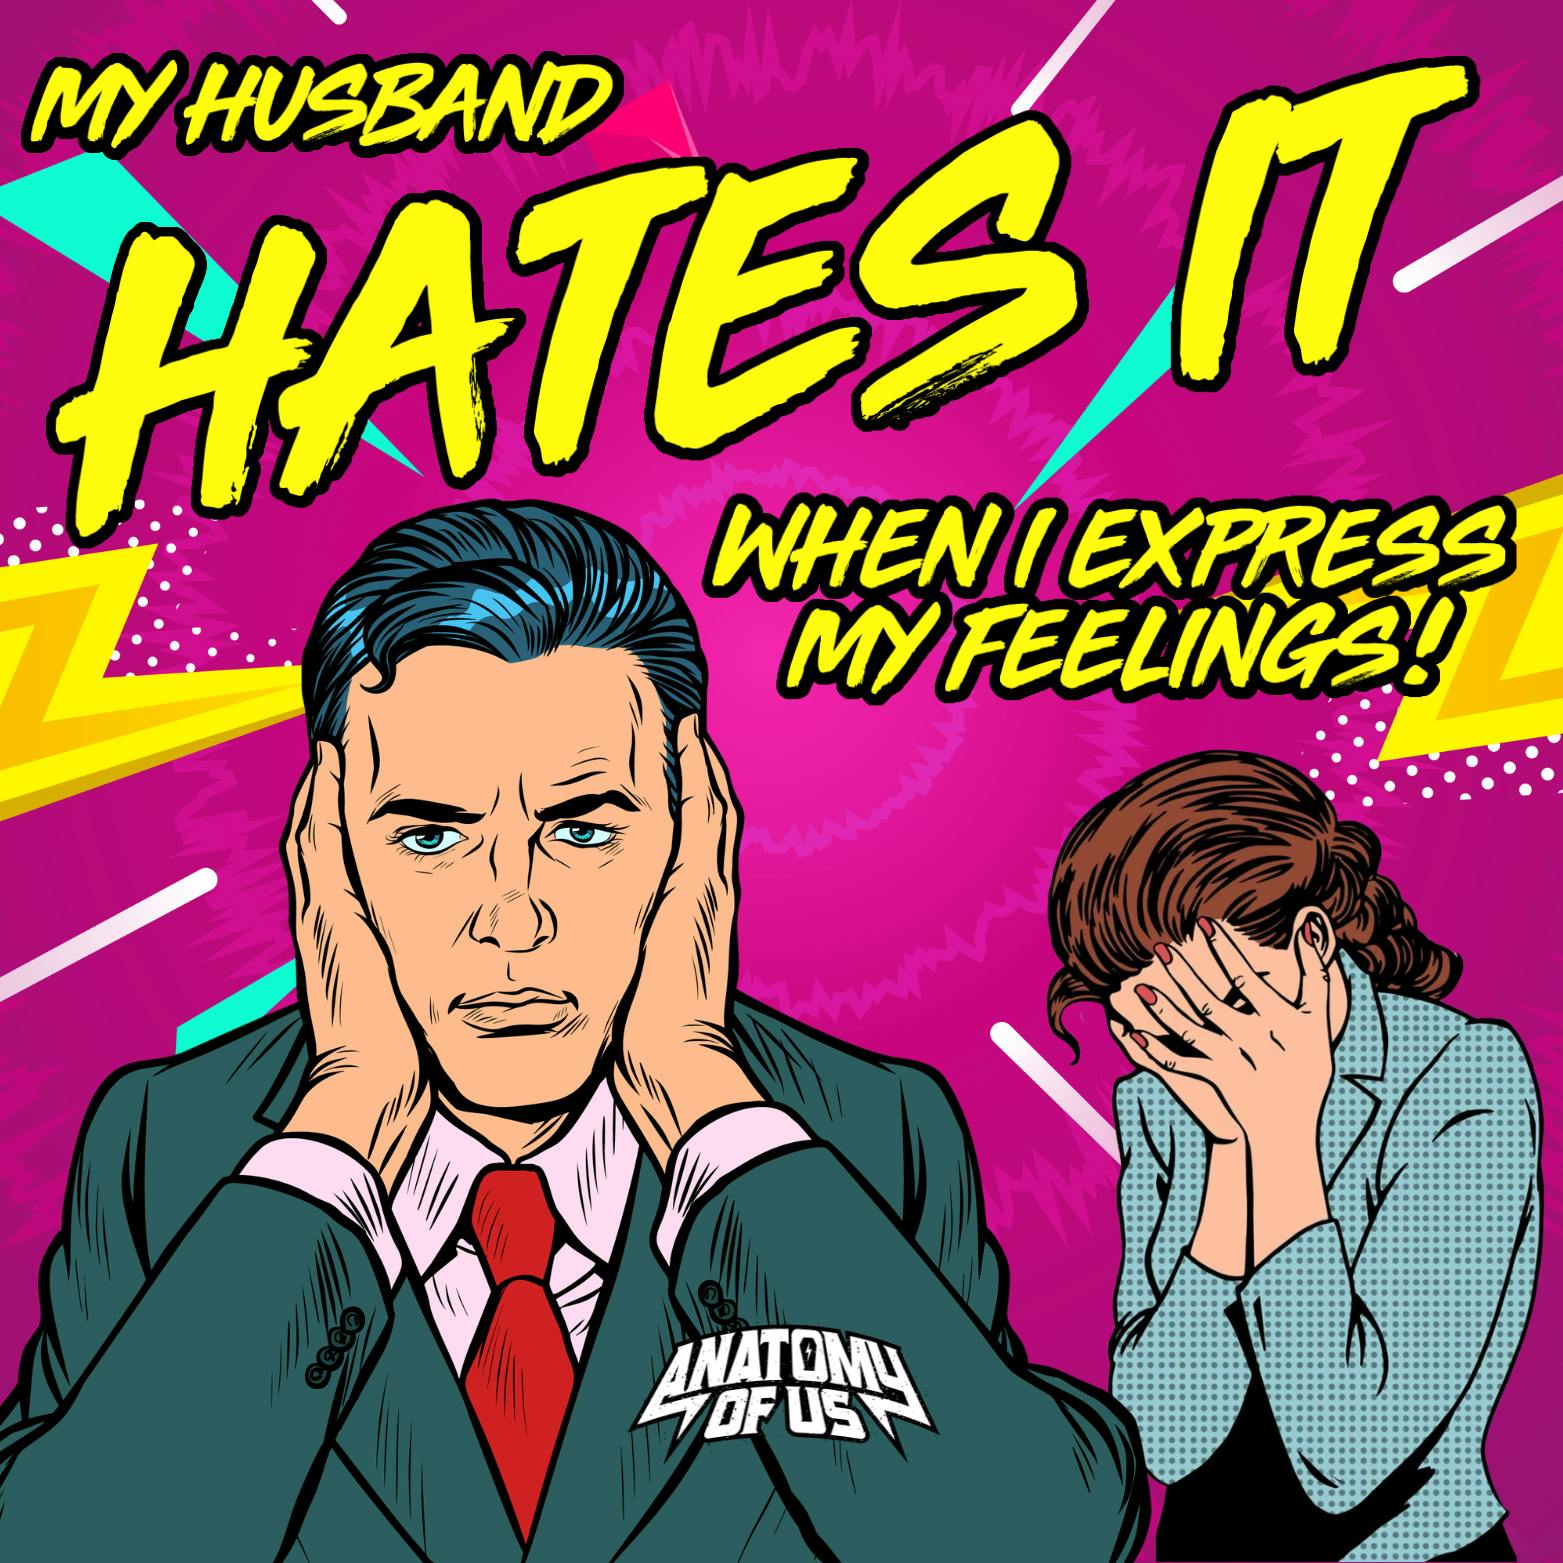 My Husband HATES IT When I Express My Feelings